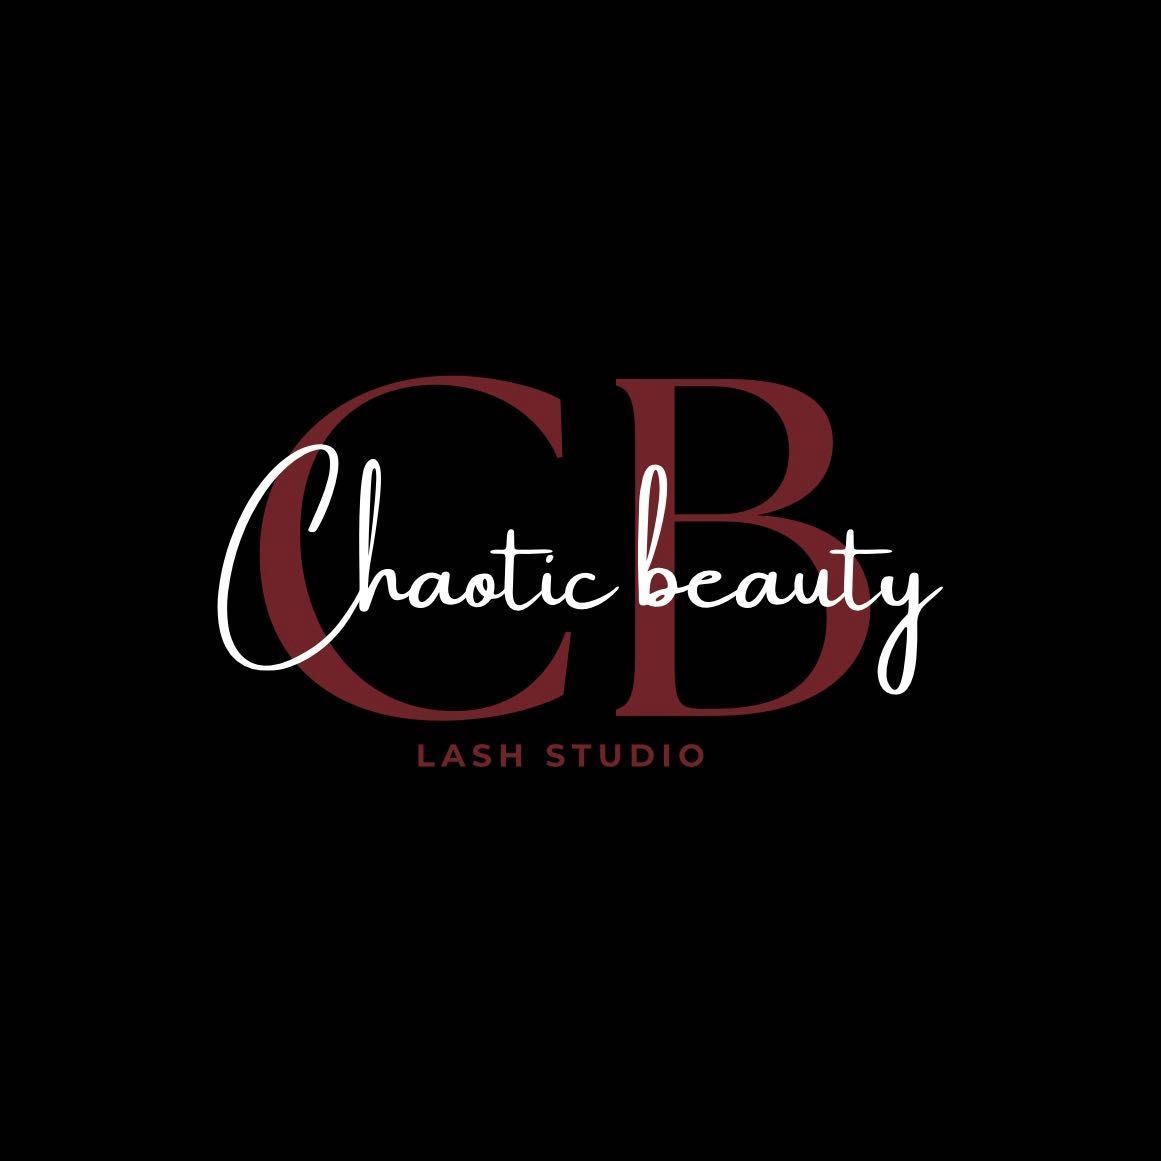 Chaotic beauty lash studios, 1477 teller avenue, New York, 10457